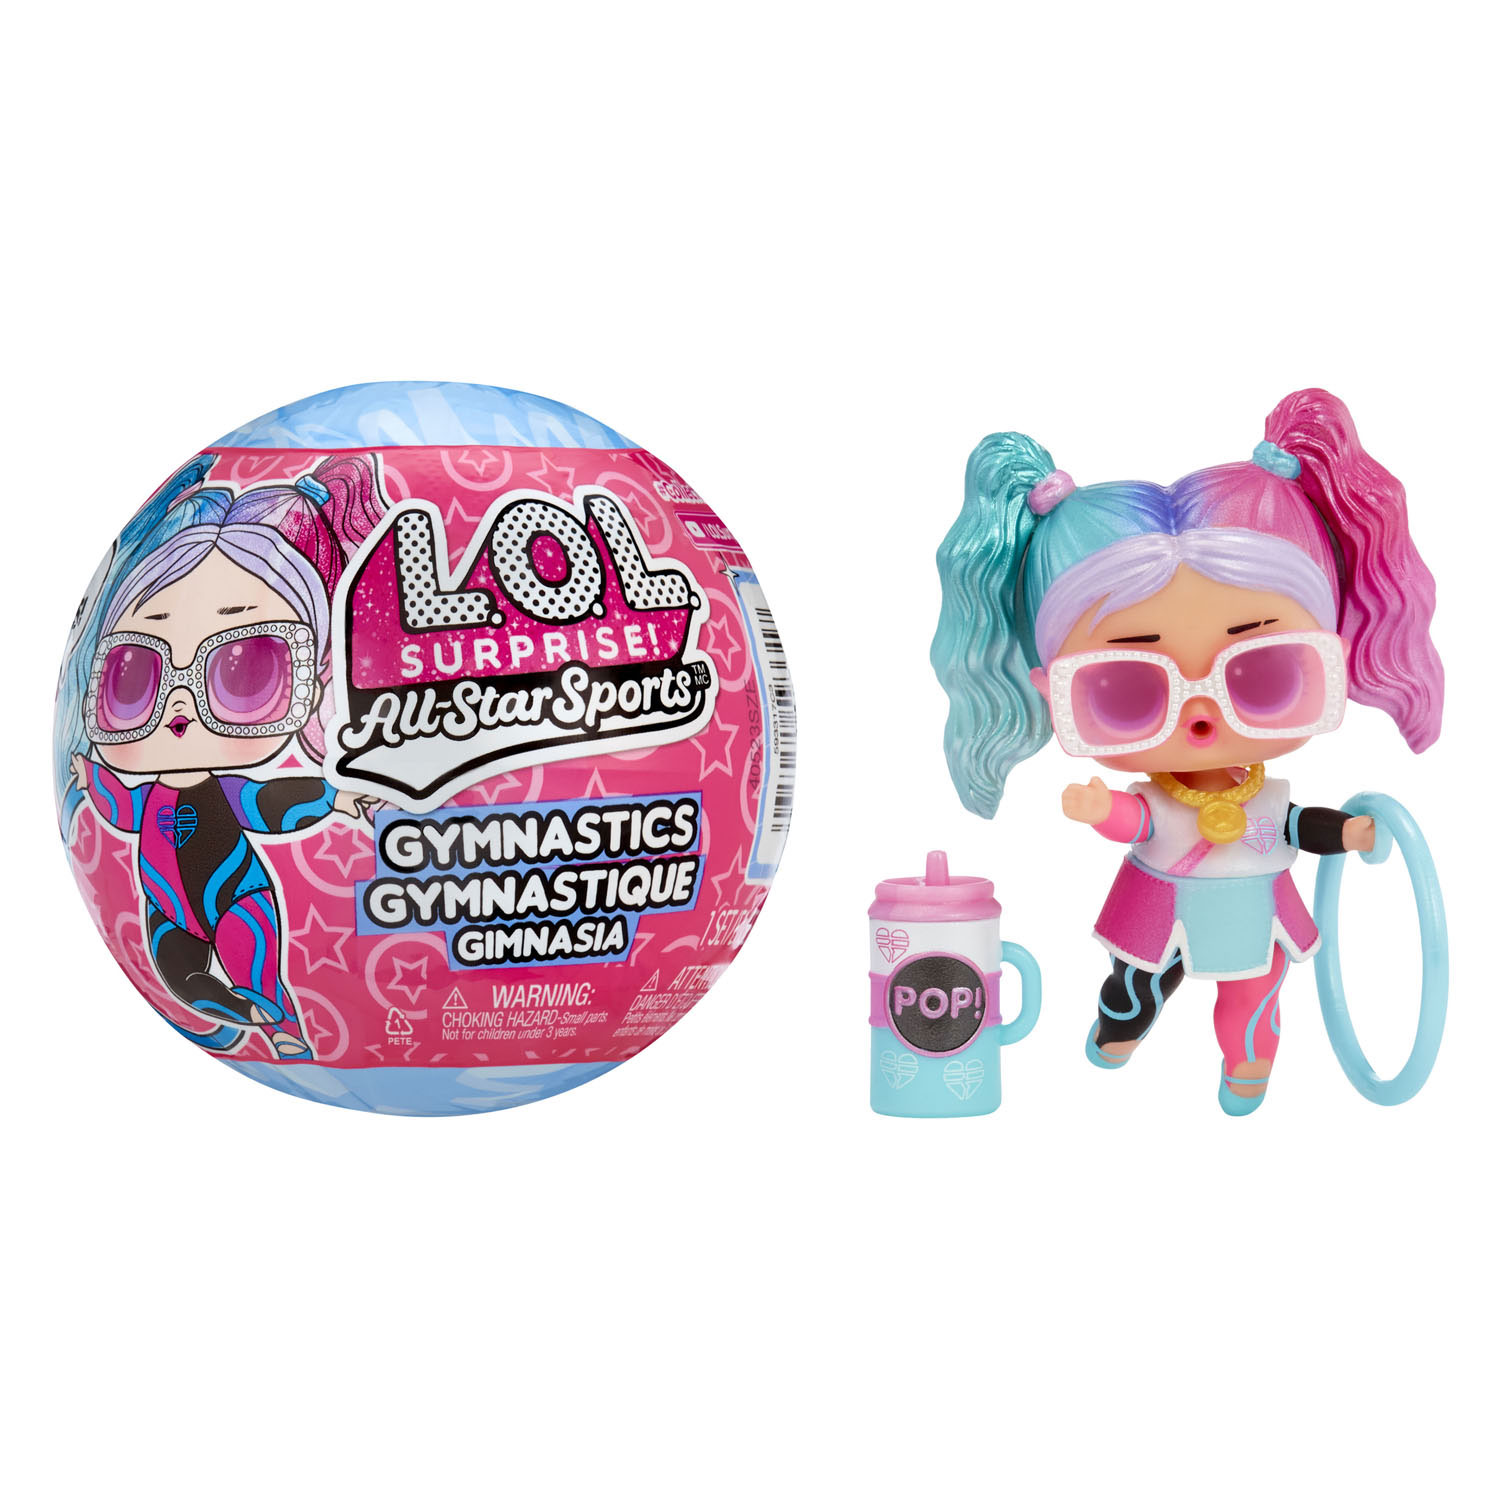 MDR. Surprise All Star Sports Mini ballon pop de gymnastique